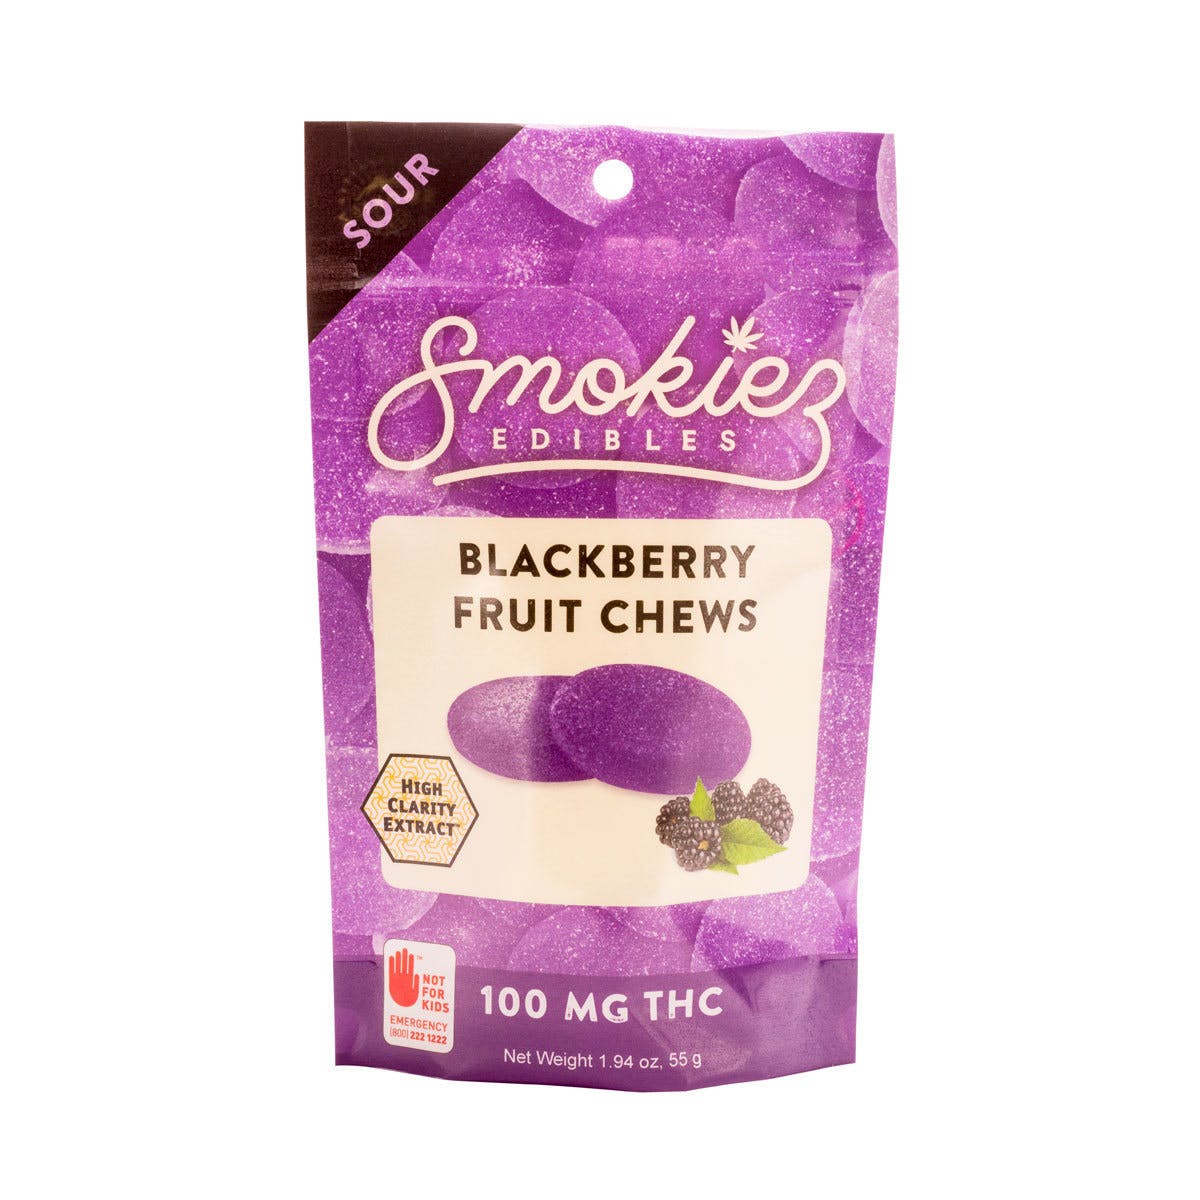 marijuana-dispensaries-kolas-in-sacramento-sour-blackberry-fruit-chews-2c-100-mg